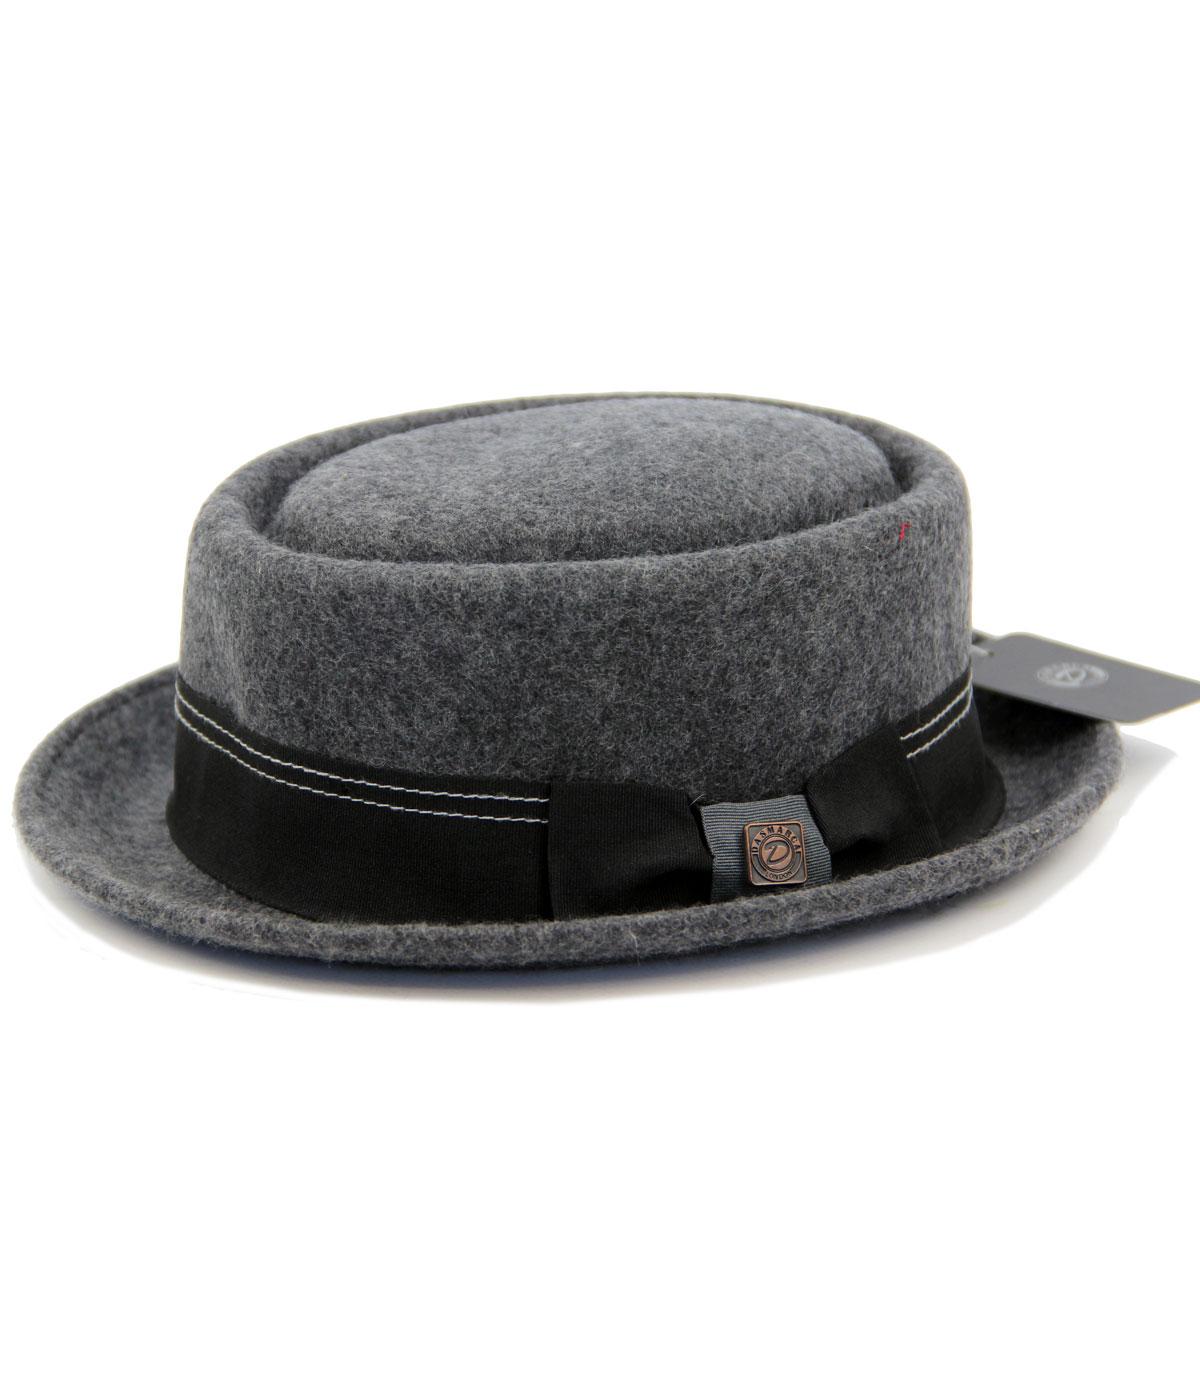 Quintin DASMARCA Retro Mod Wool Felt Porkpie Hat